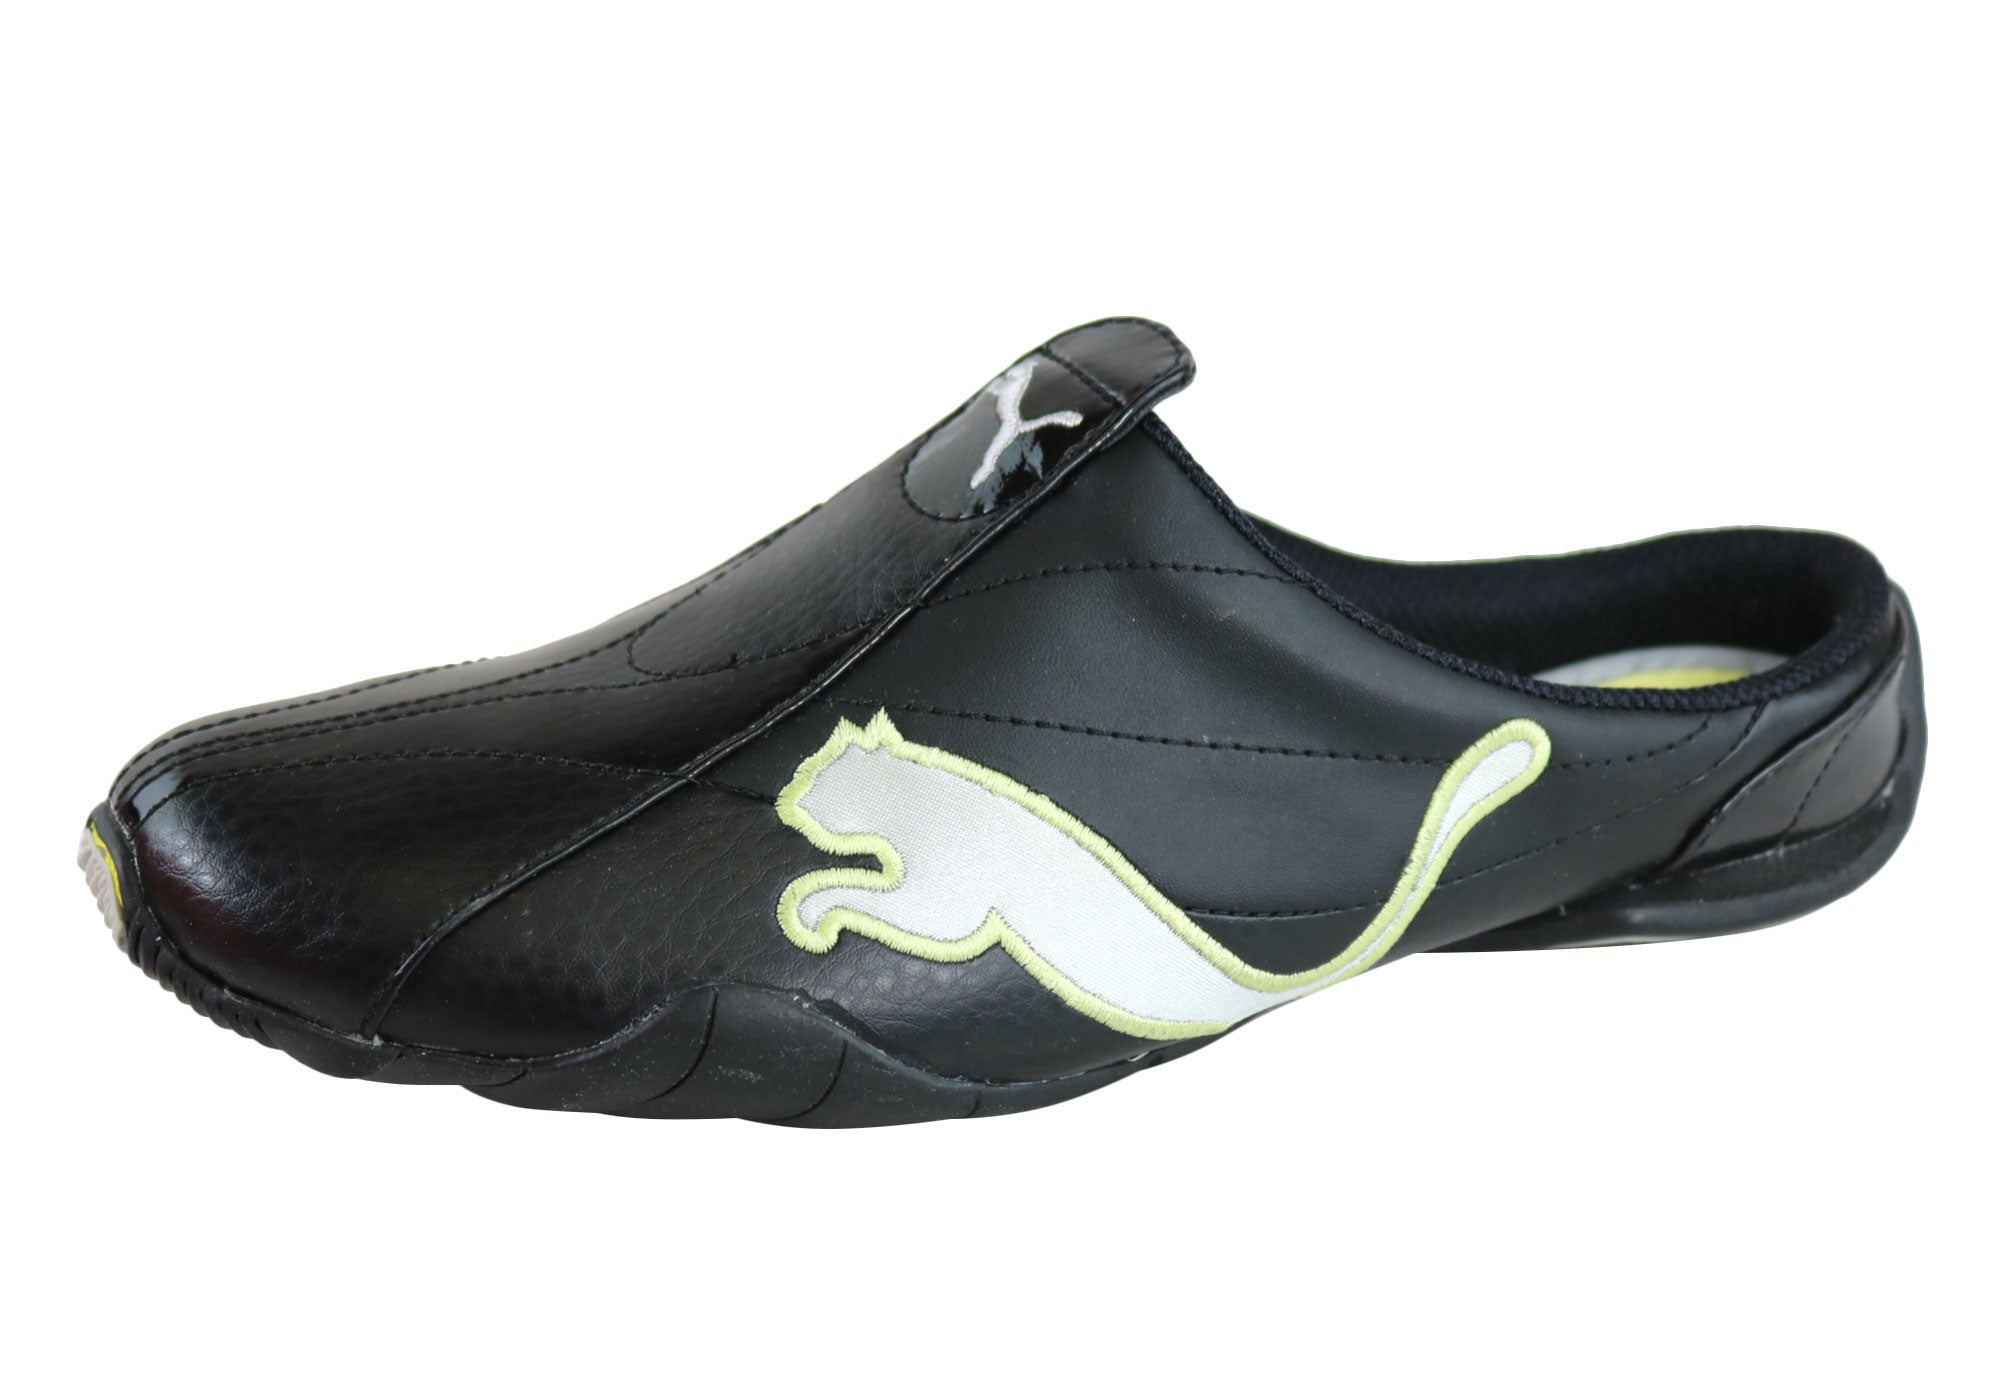 puma slip resistant shoes for women